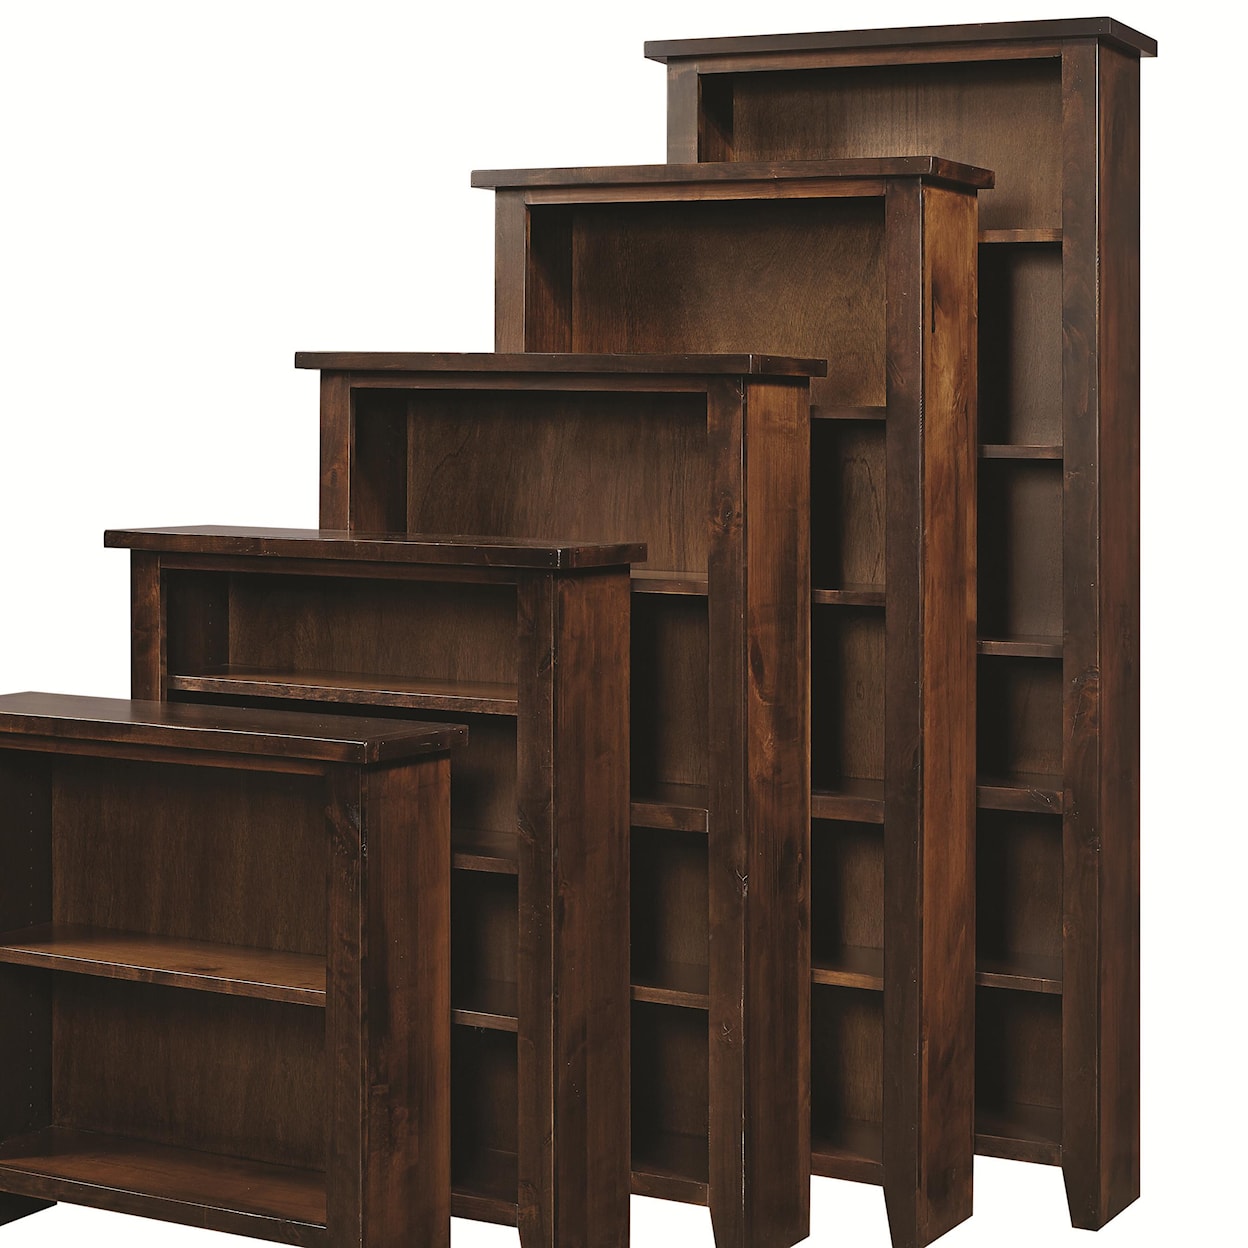 Aspenhome Alder Grove Bookcase 84" H with 5 Shelves